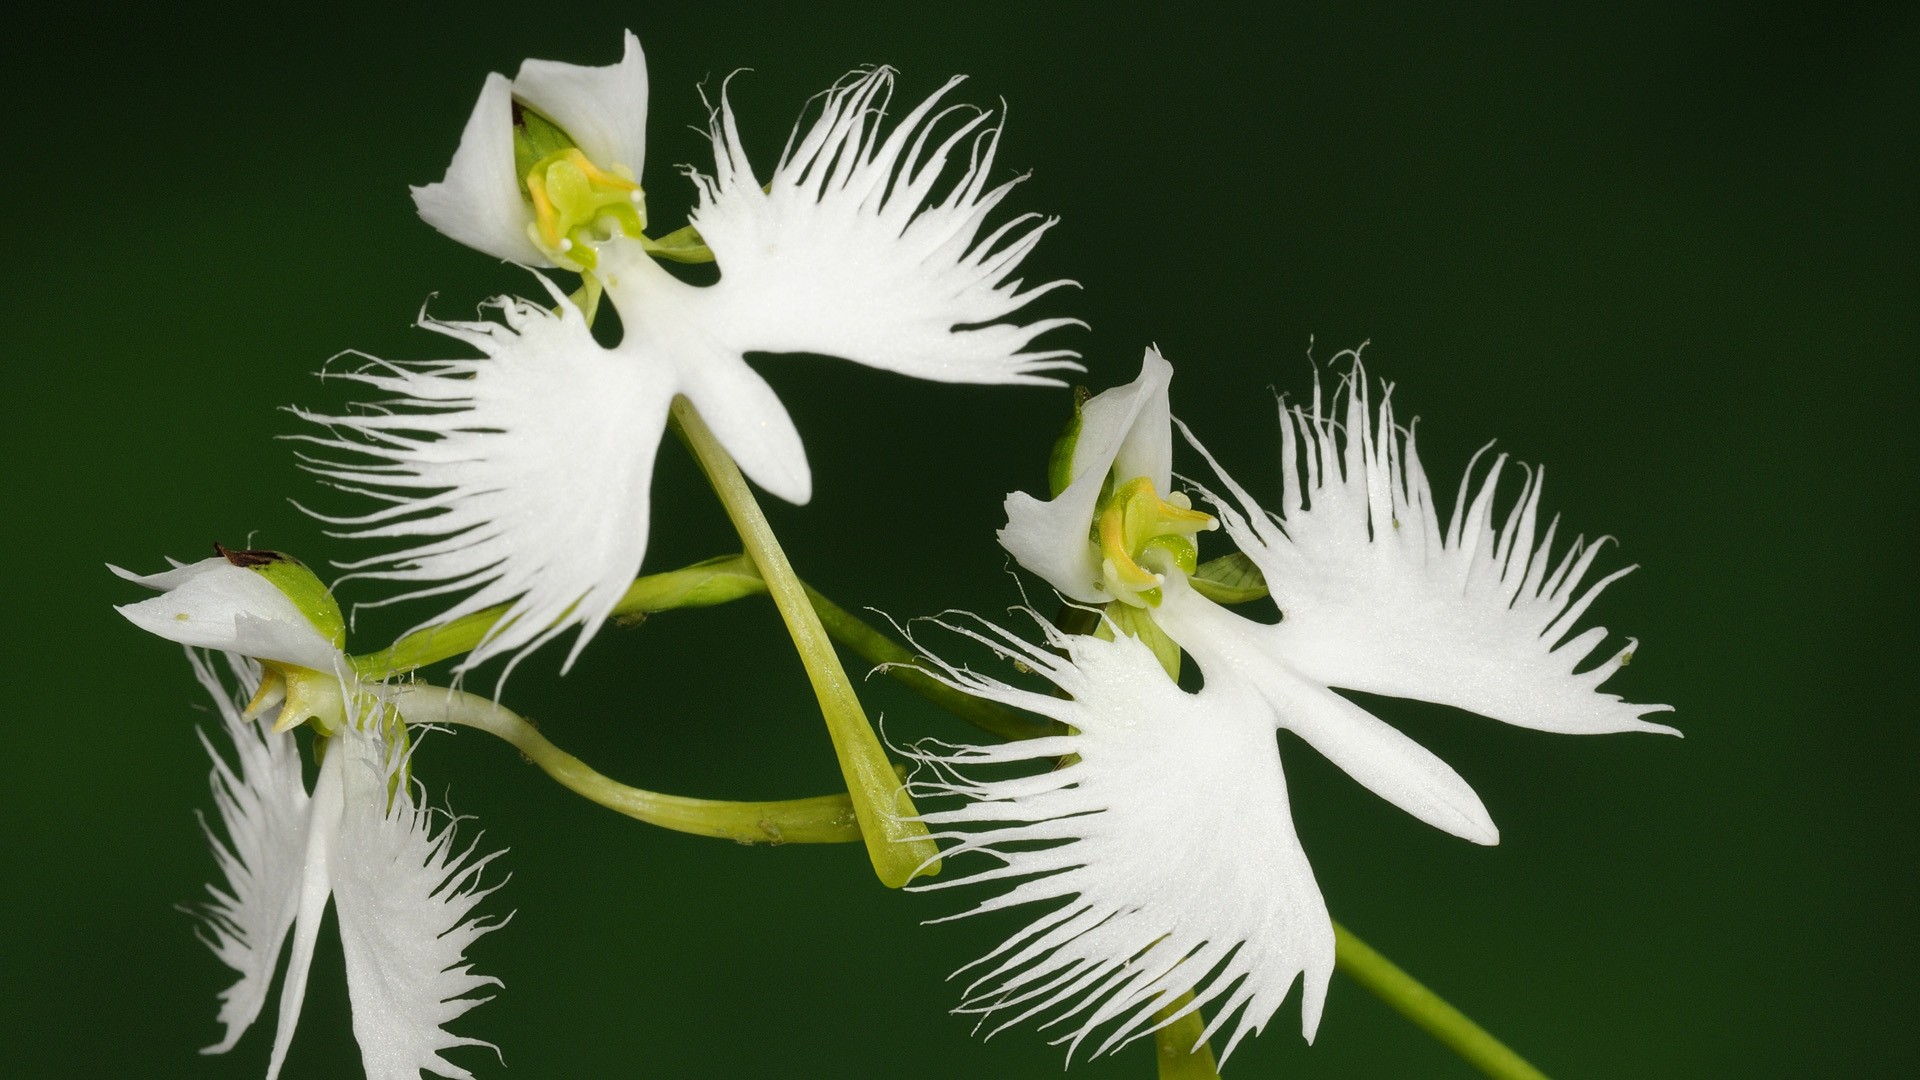 Unique tav. Хабенария Радиата белая цапля. Habenaria Radiata. Орхидея «большая белая цапля» (Habenaria Radiata). Орхидея хабенария Радиата. Орхидея хабенария Радиата – белая цапля.